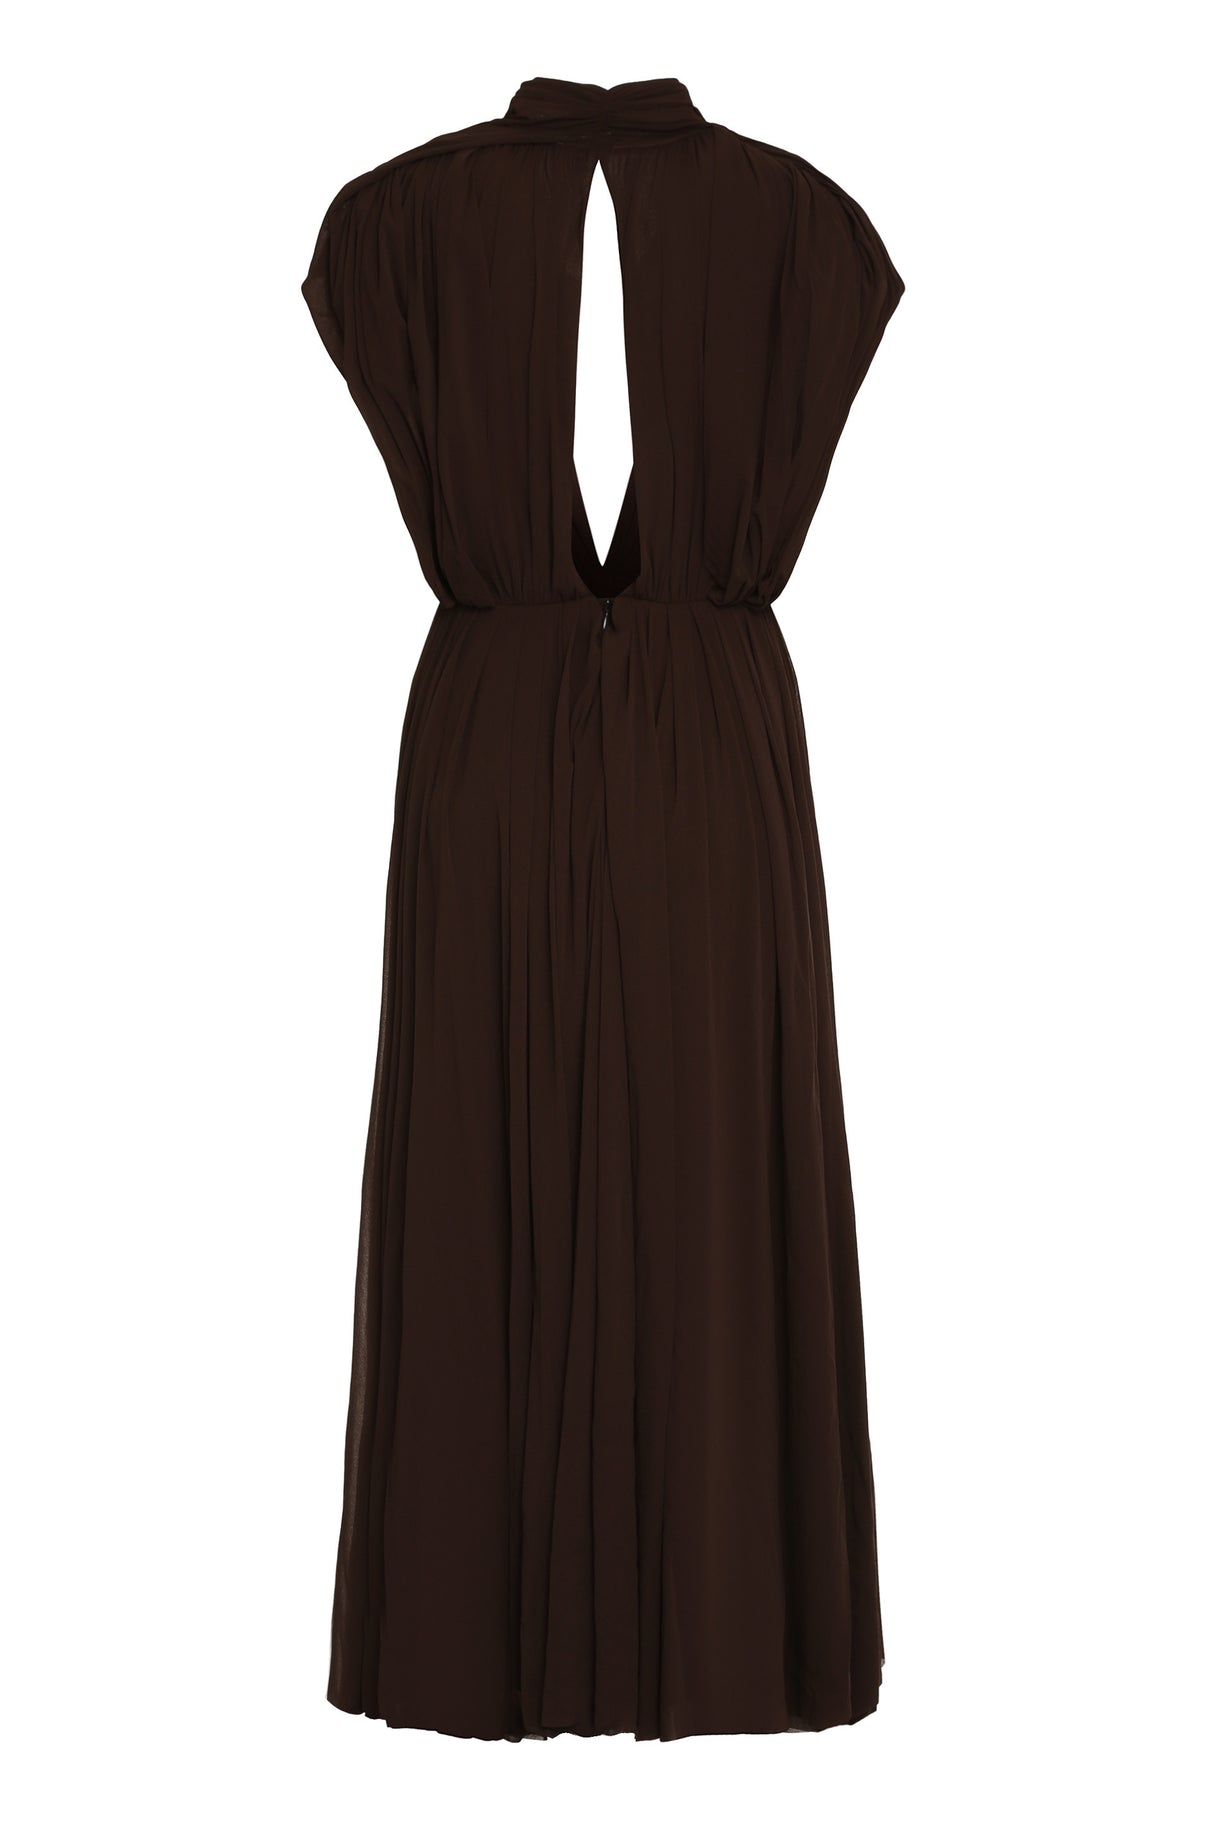 PHILOSOPHY DI LORENZO SERAFINI Elegant Brown Crepe Dress with Wide Neckline for Women - SS24